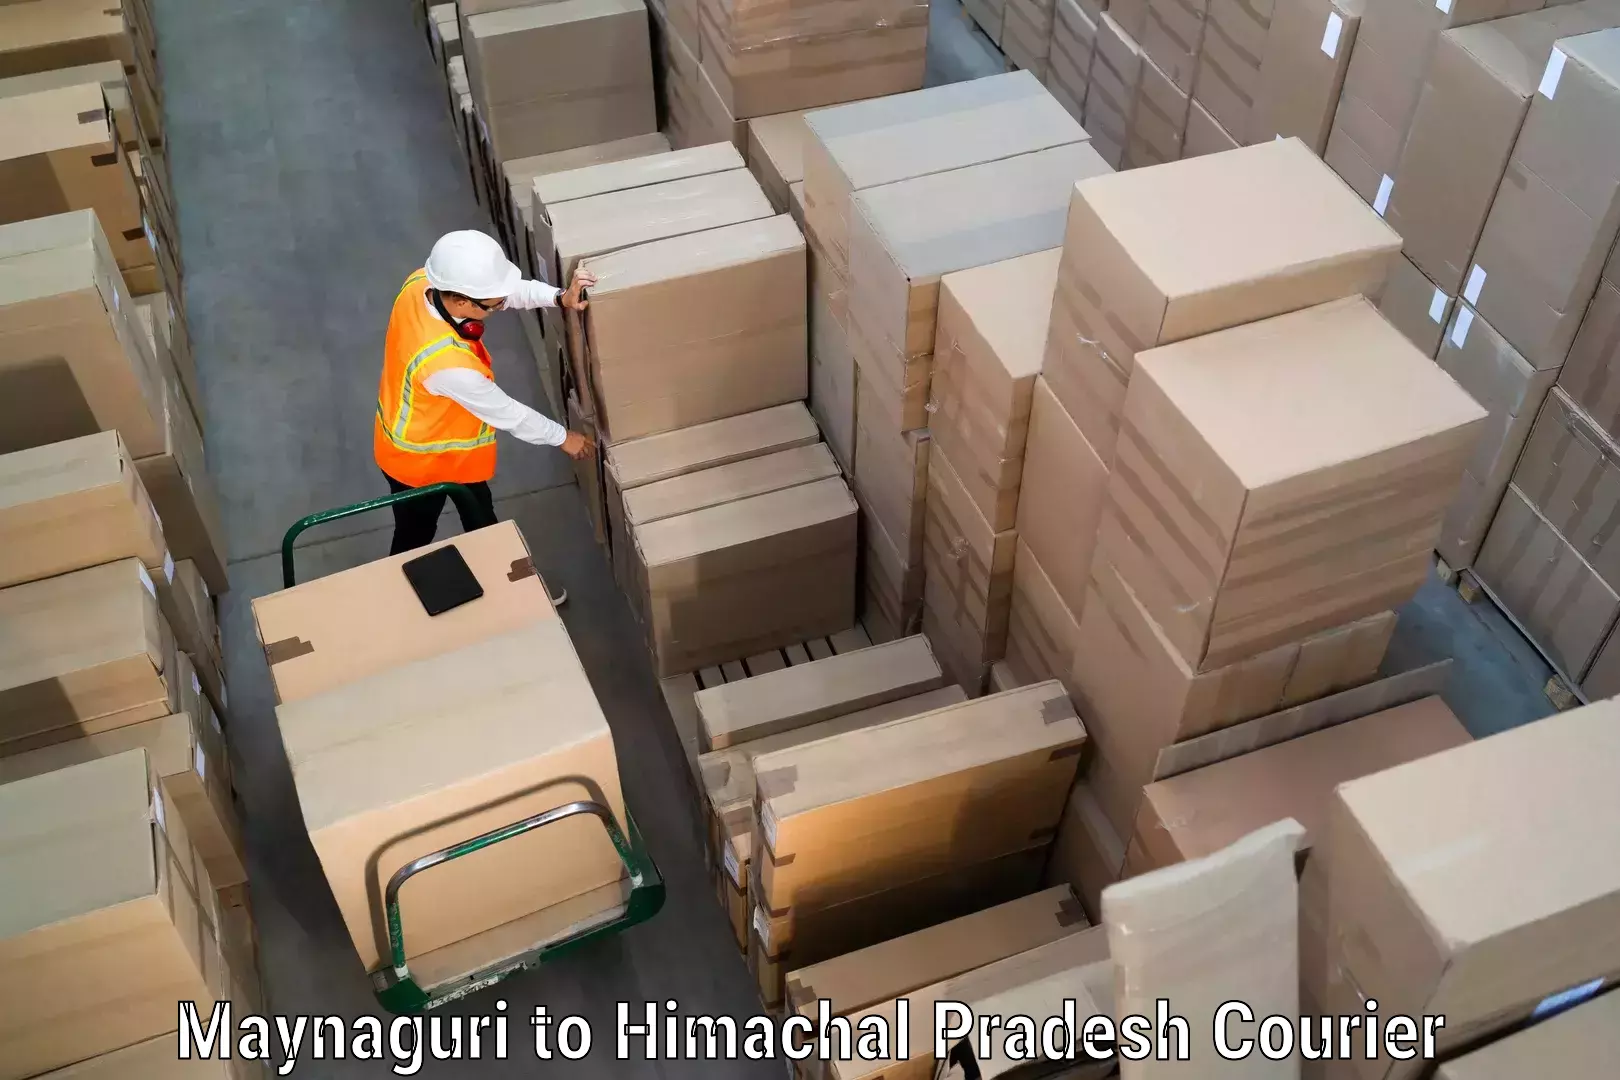 Courier service booking Maynaguri to Himachal Pradesh